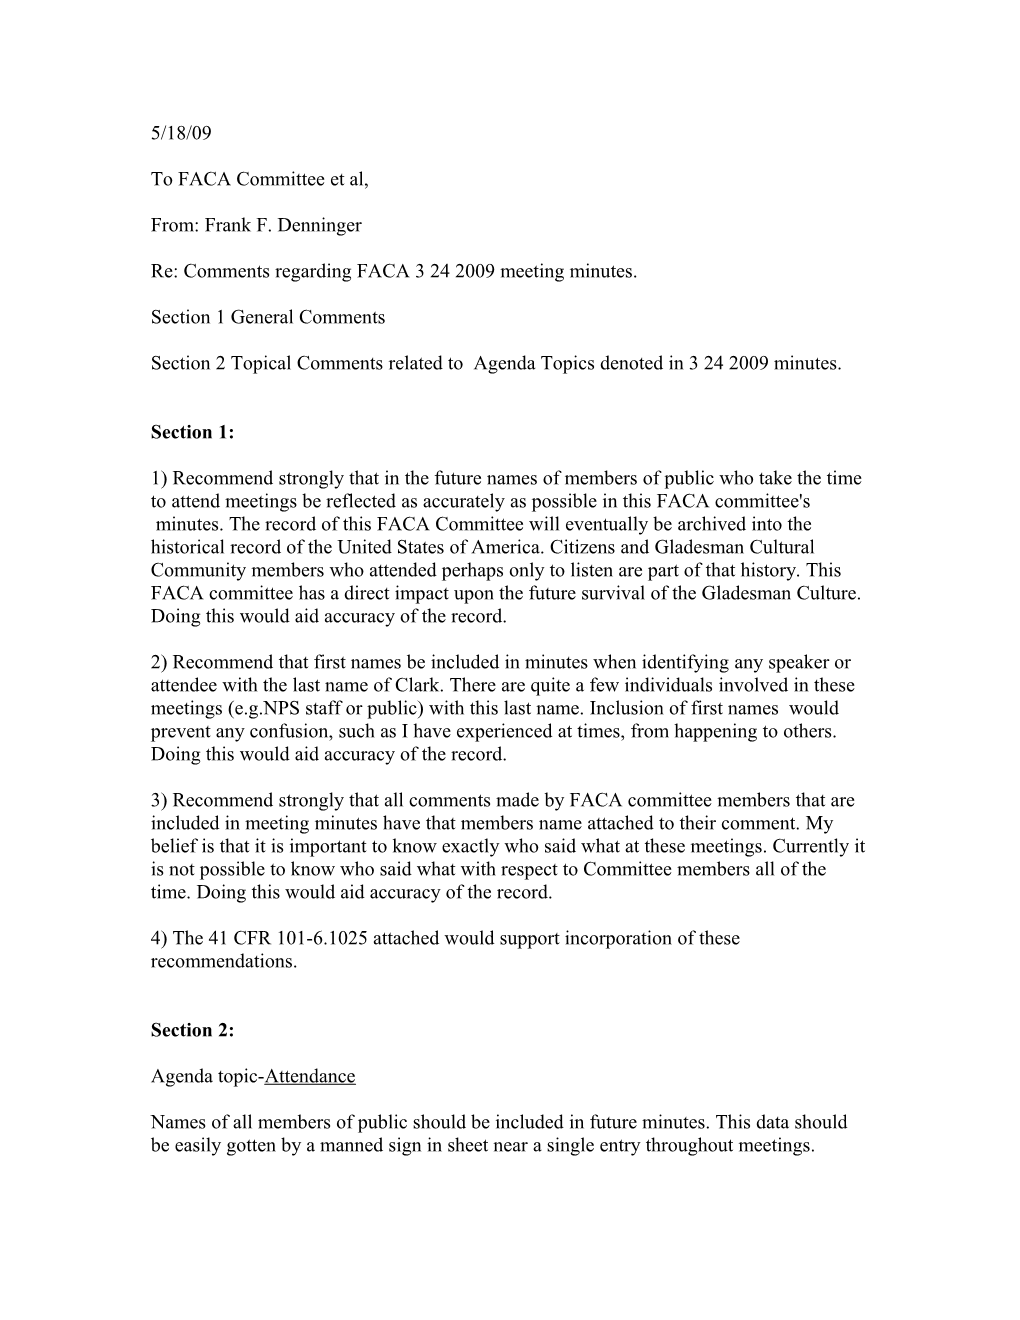 Re: Comments Regarding FACA 3 24 2009Meeting Minutes